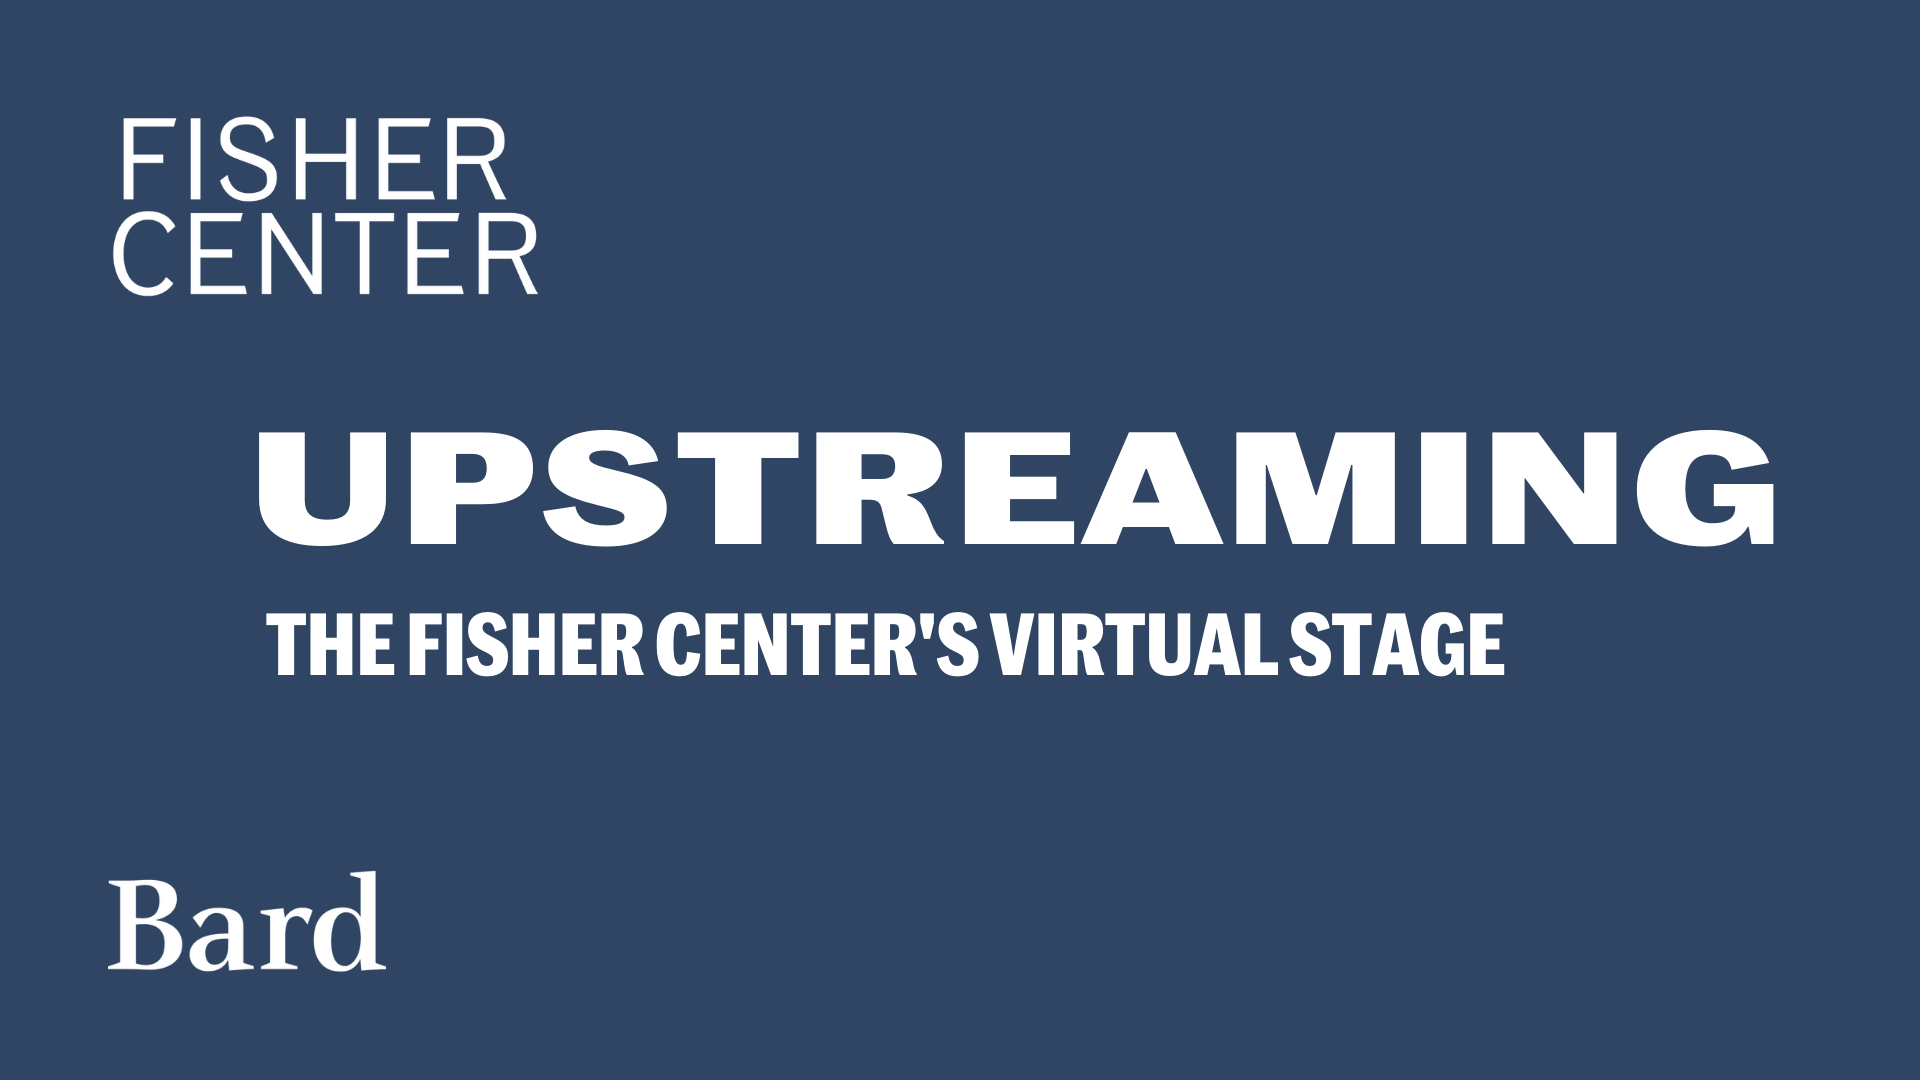 Visit https://fishercenter.bard.edu/events/UPS-lab-biennial/